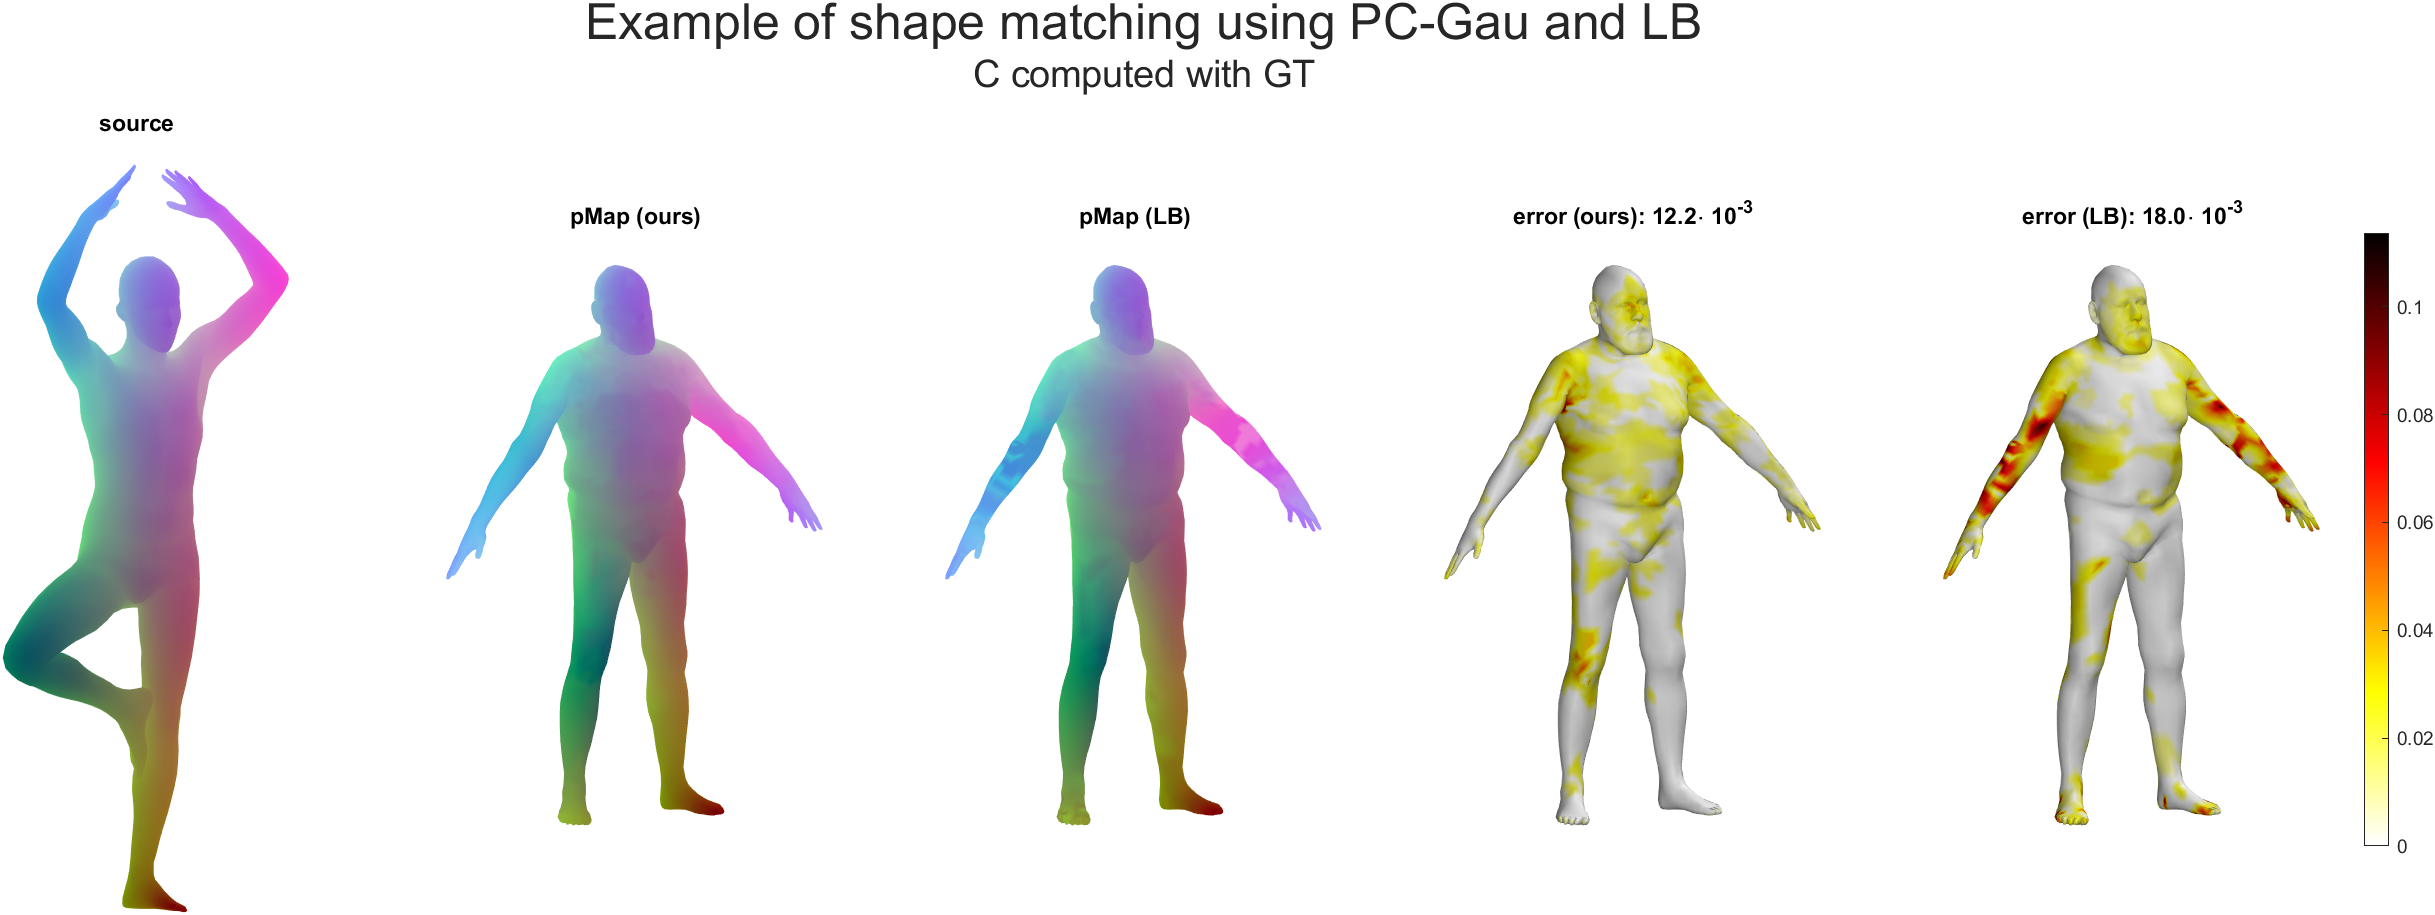 shape_matching_GT.png